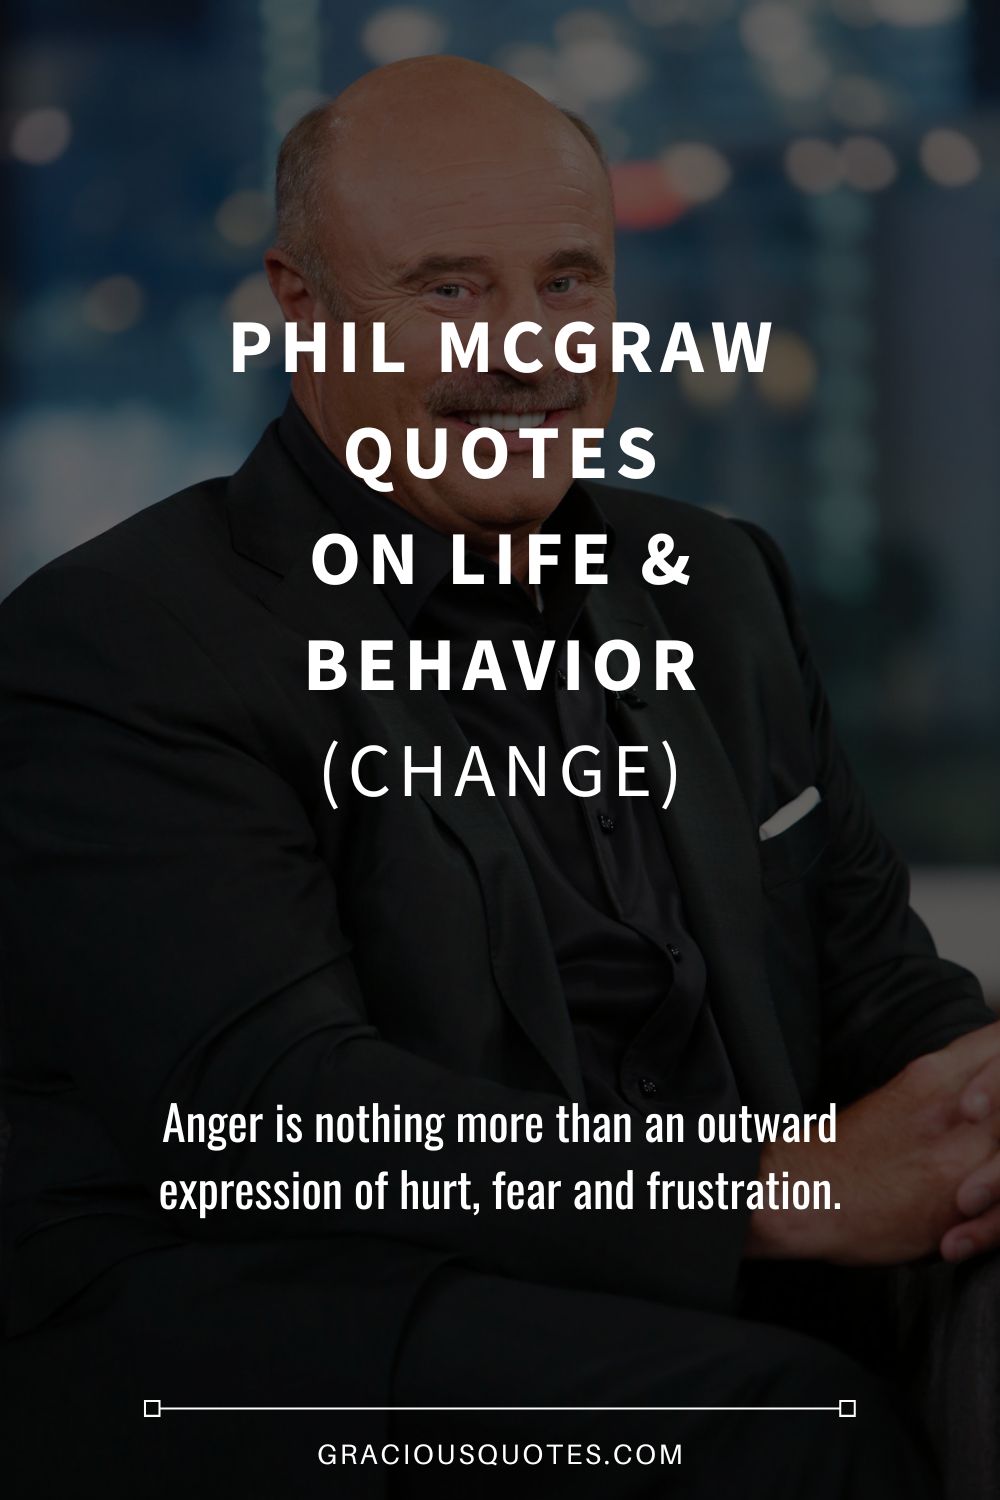 Phil McGraw Quotes on Life & Behavior (CHANGE) - Gracious Quotes